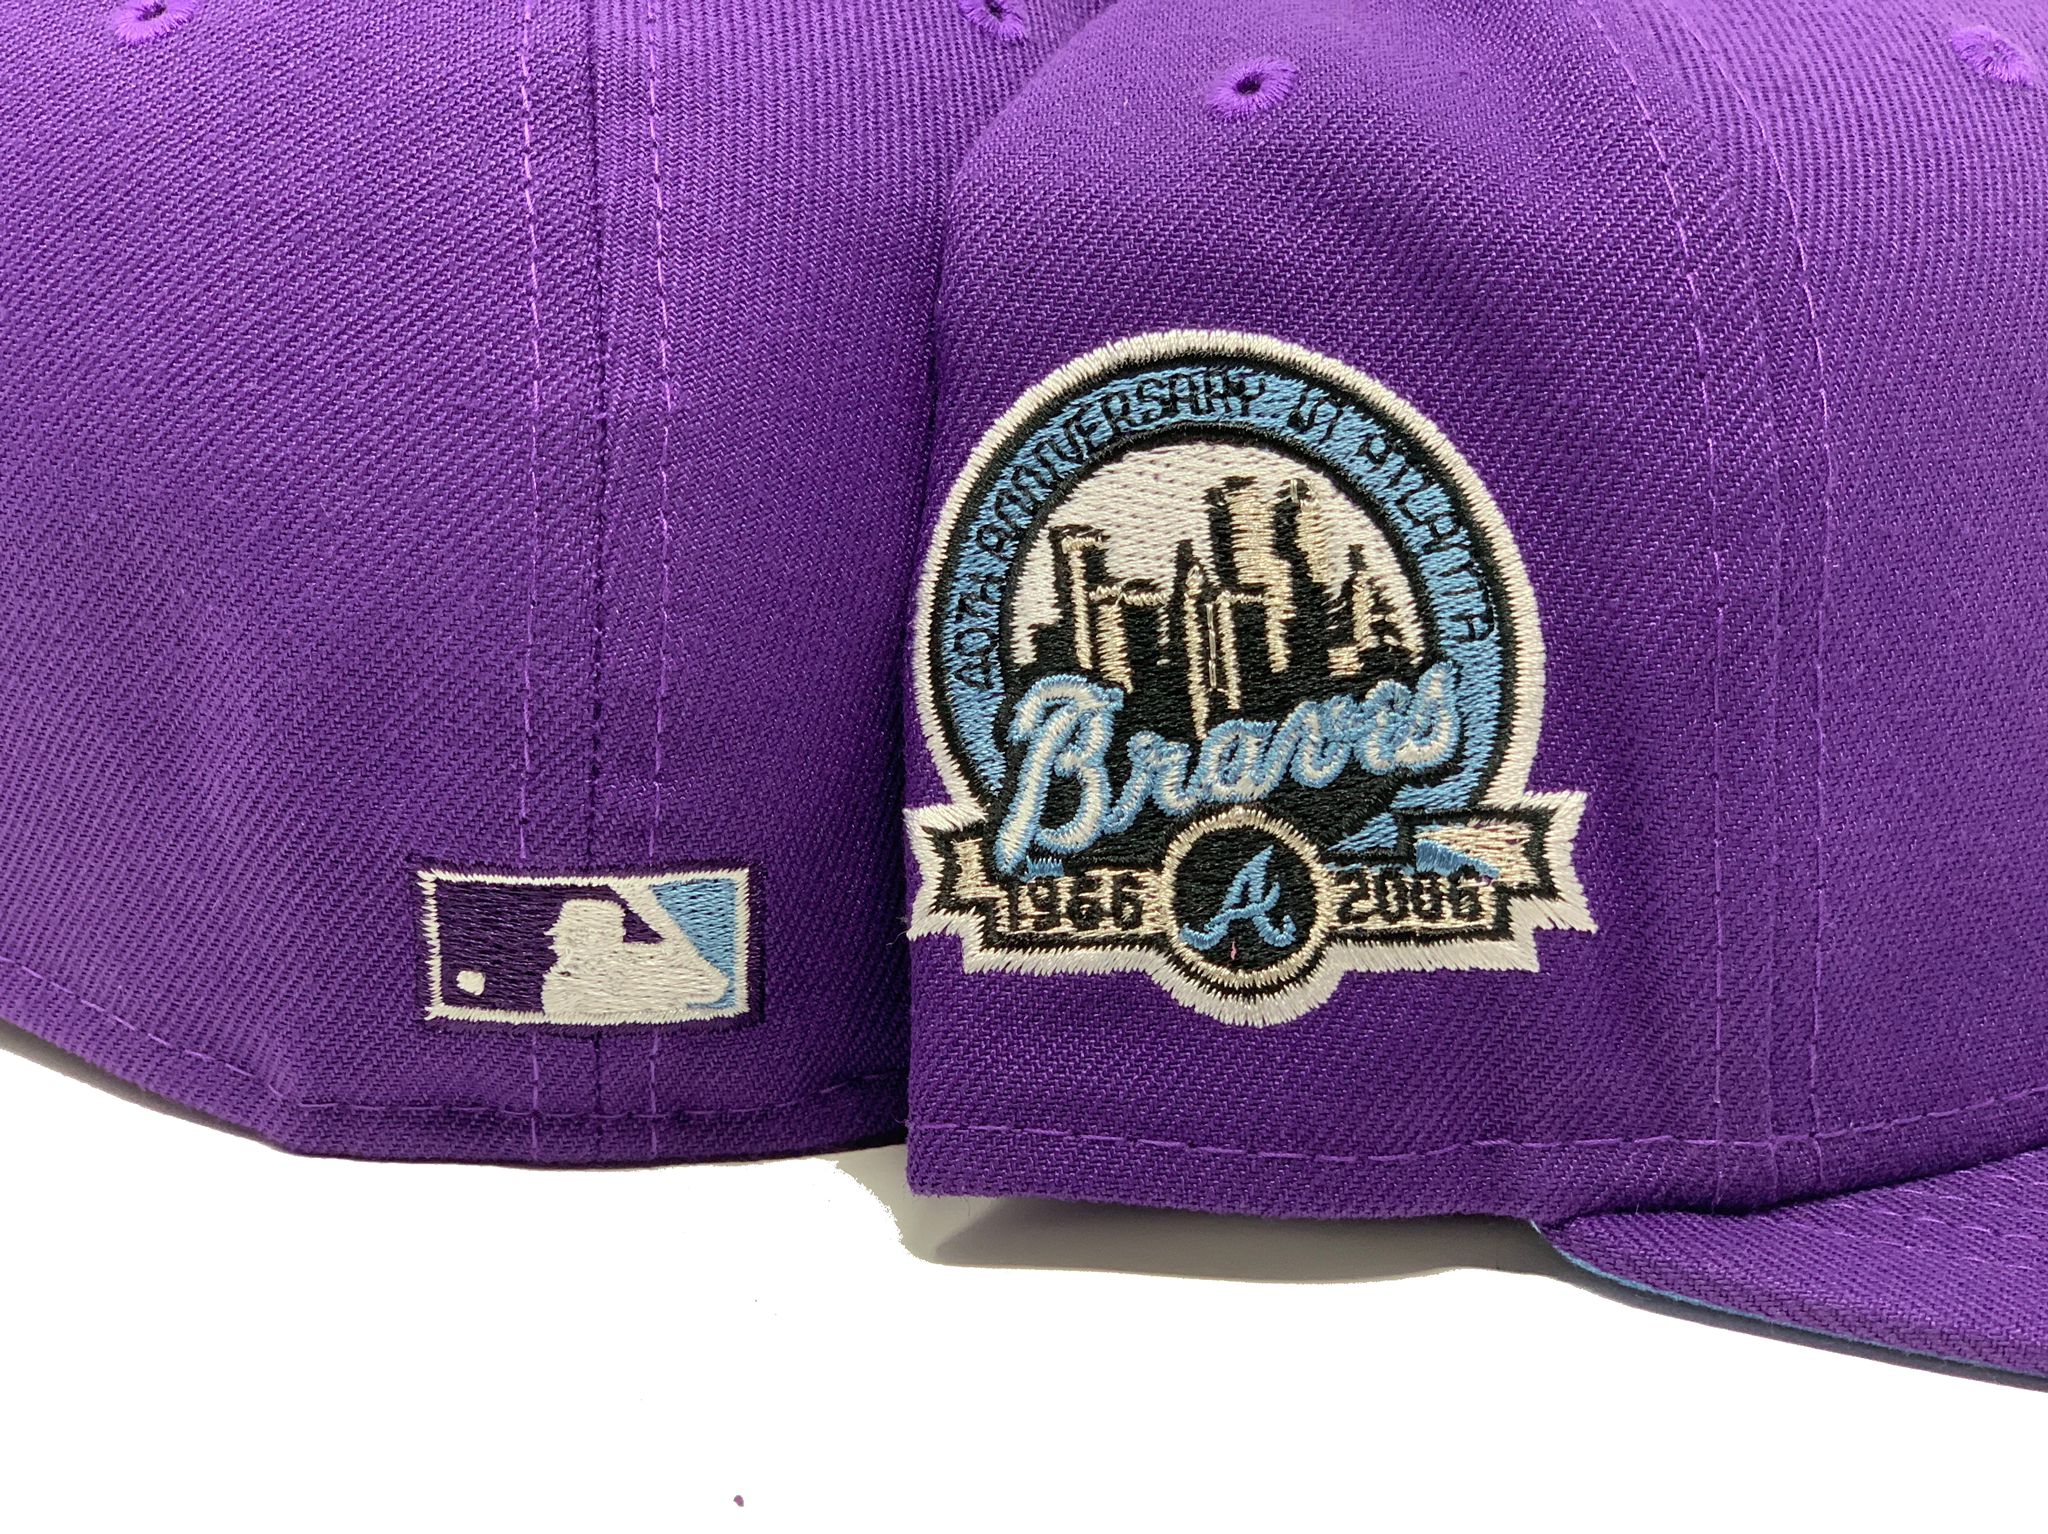 Atlanta Braves Custom New Era Cap Purple – JustFitteds